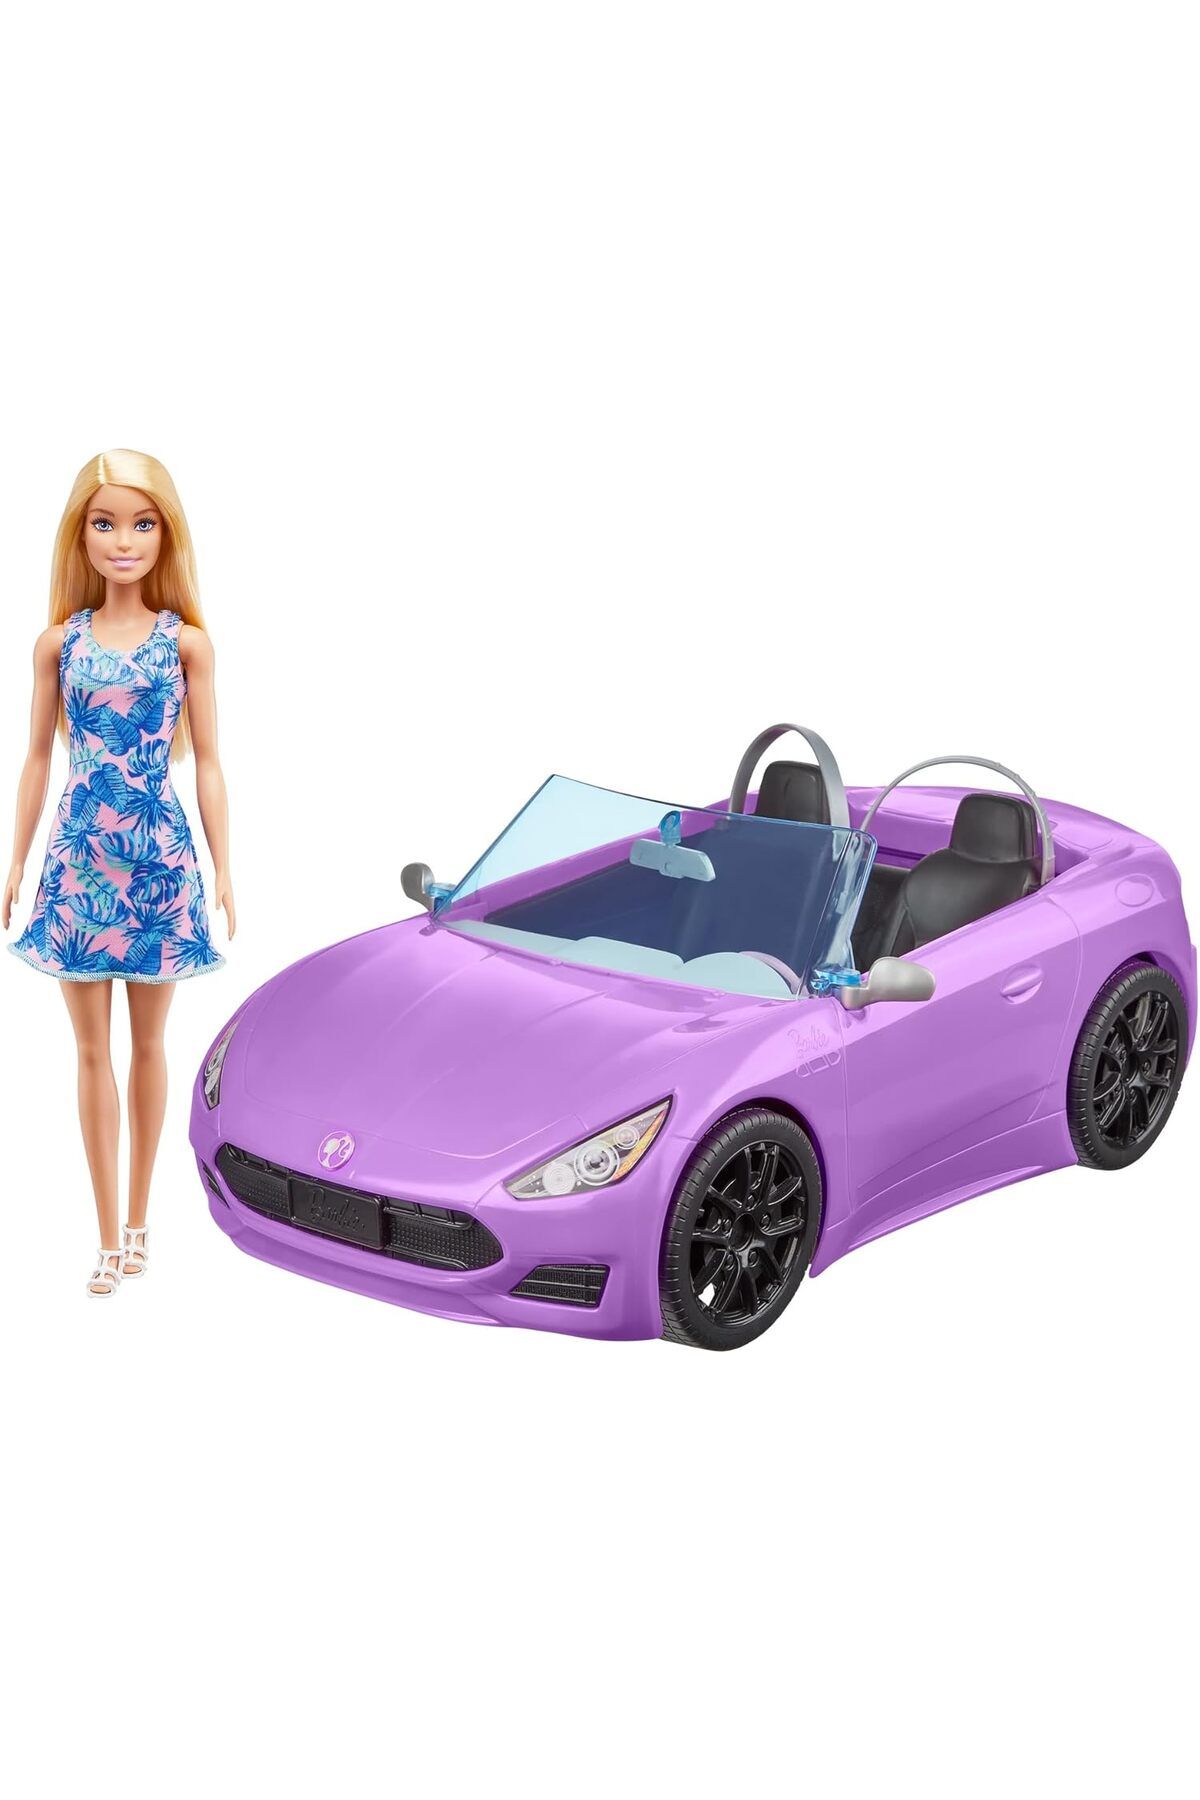 Barbie ve Özel Arabası HBY29 | GC Doll + Convertible Caucasian CSTM